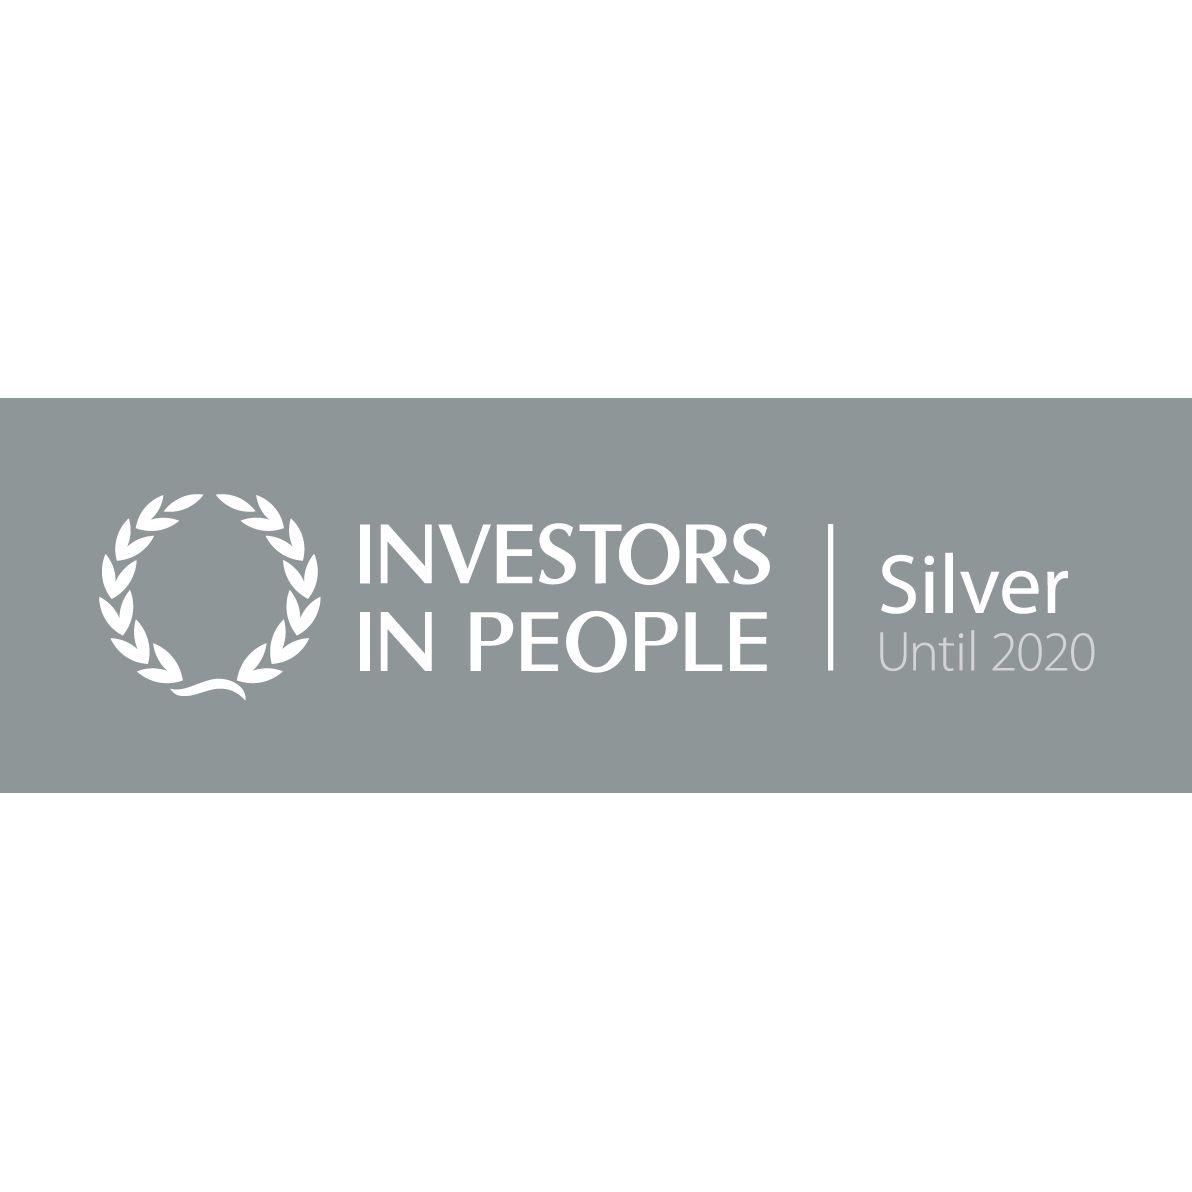 Investors in People Logo - McLaren achieve Silver Award for Investors in People